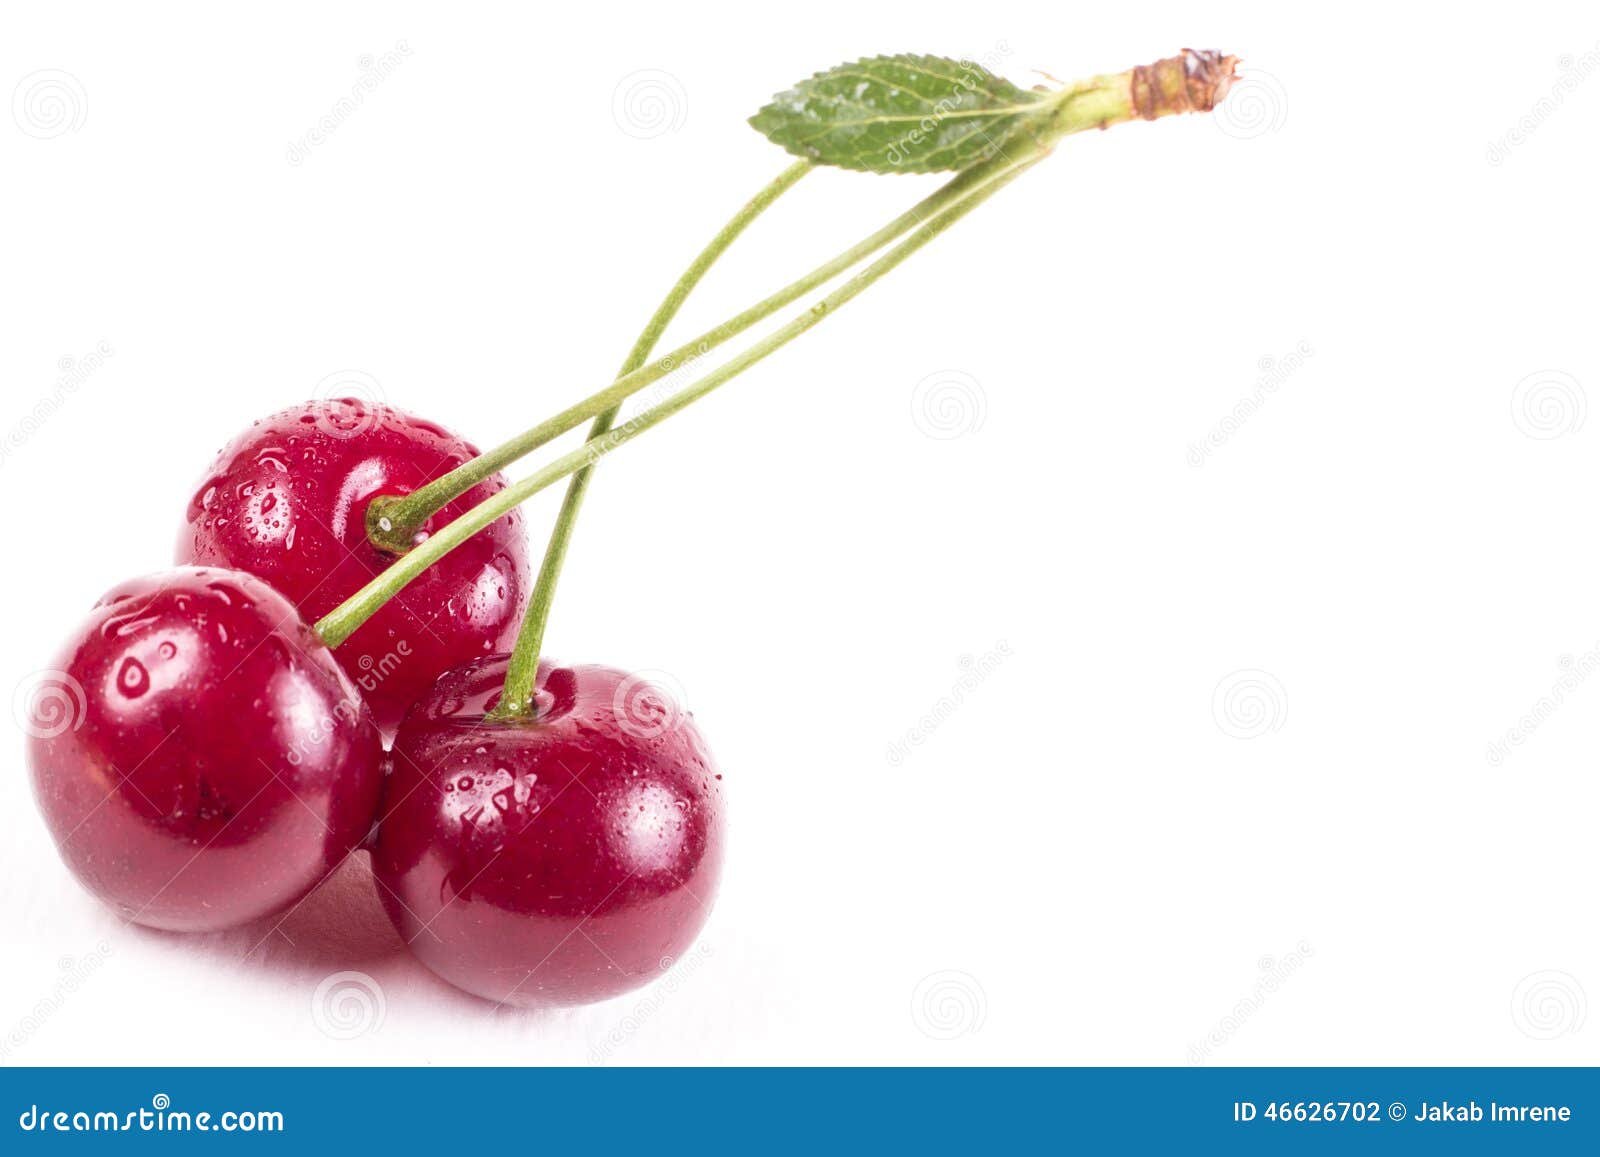 Sour cherries on white stock photo. Image of ripe, dessert - 46626702